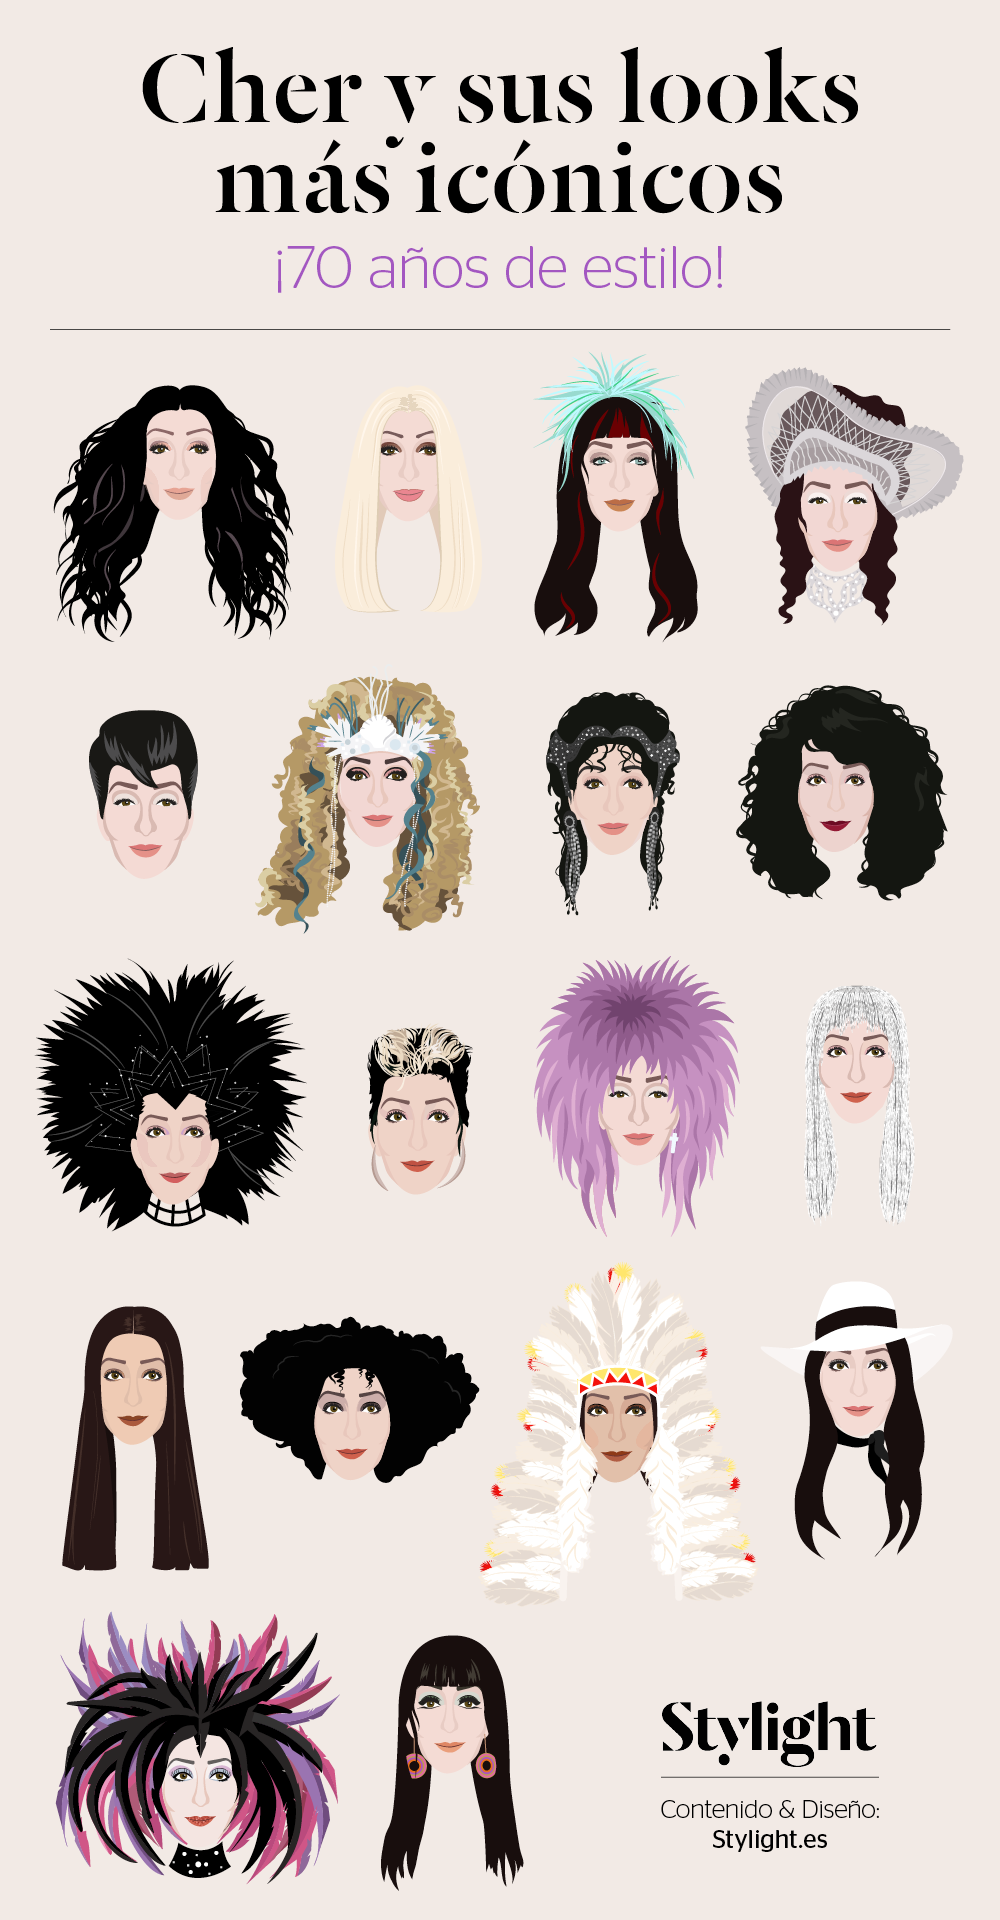 Stylight - Cher 70 Cumpleaños - Infografía